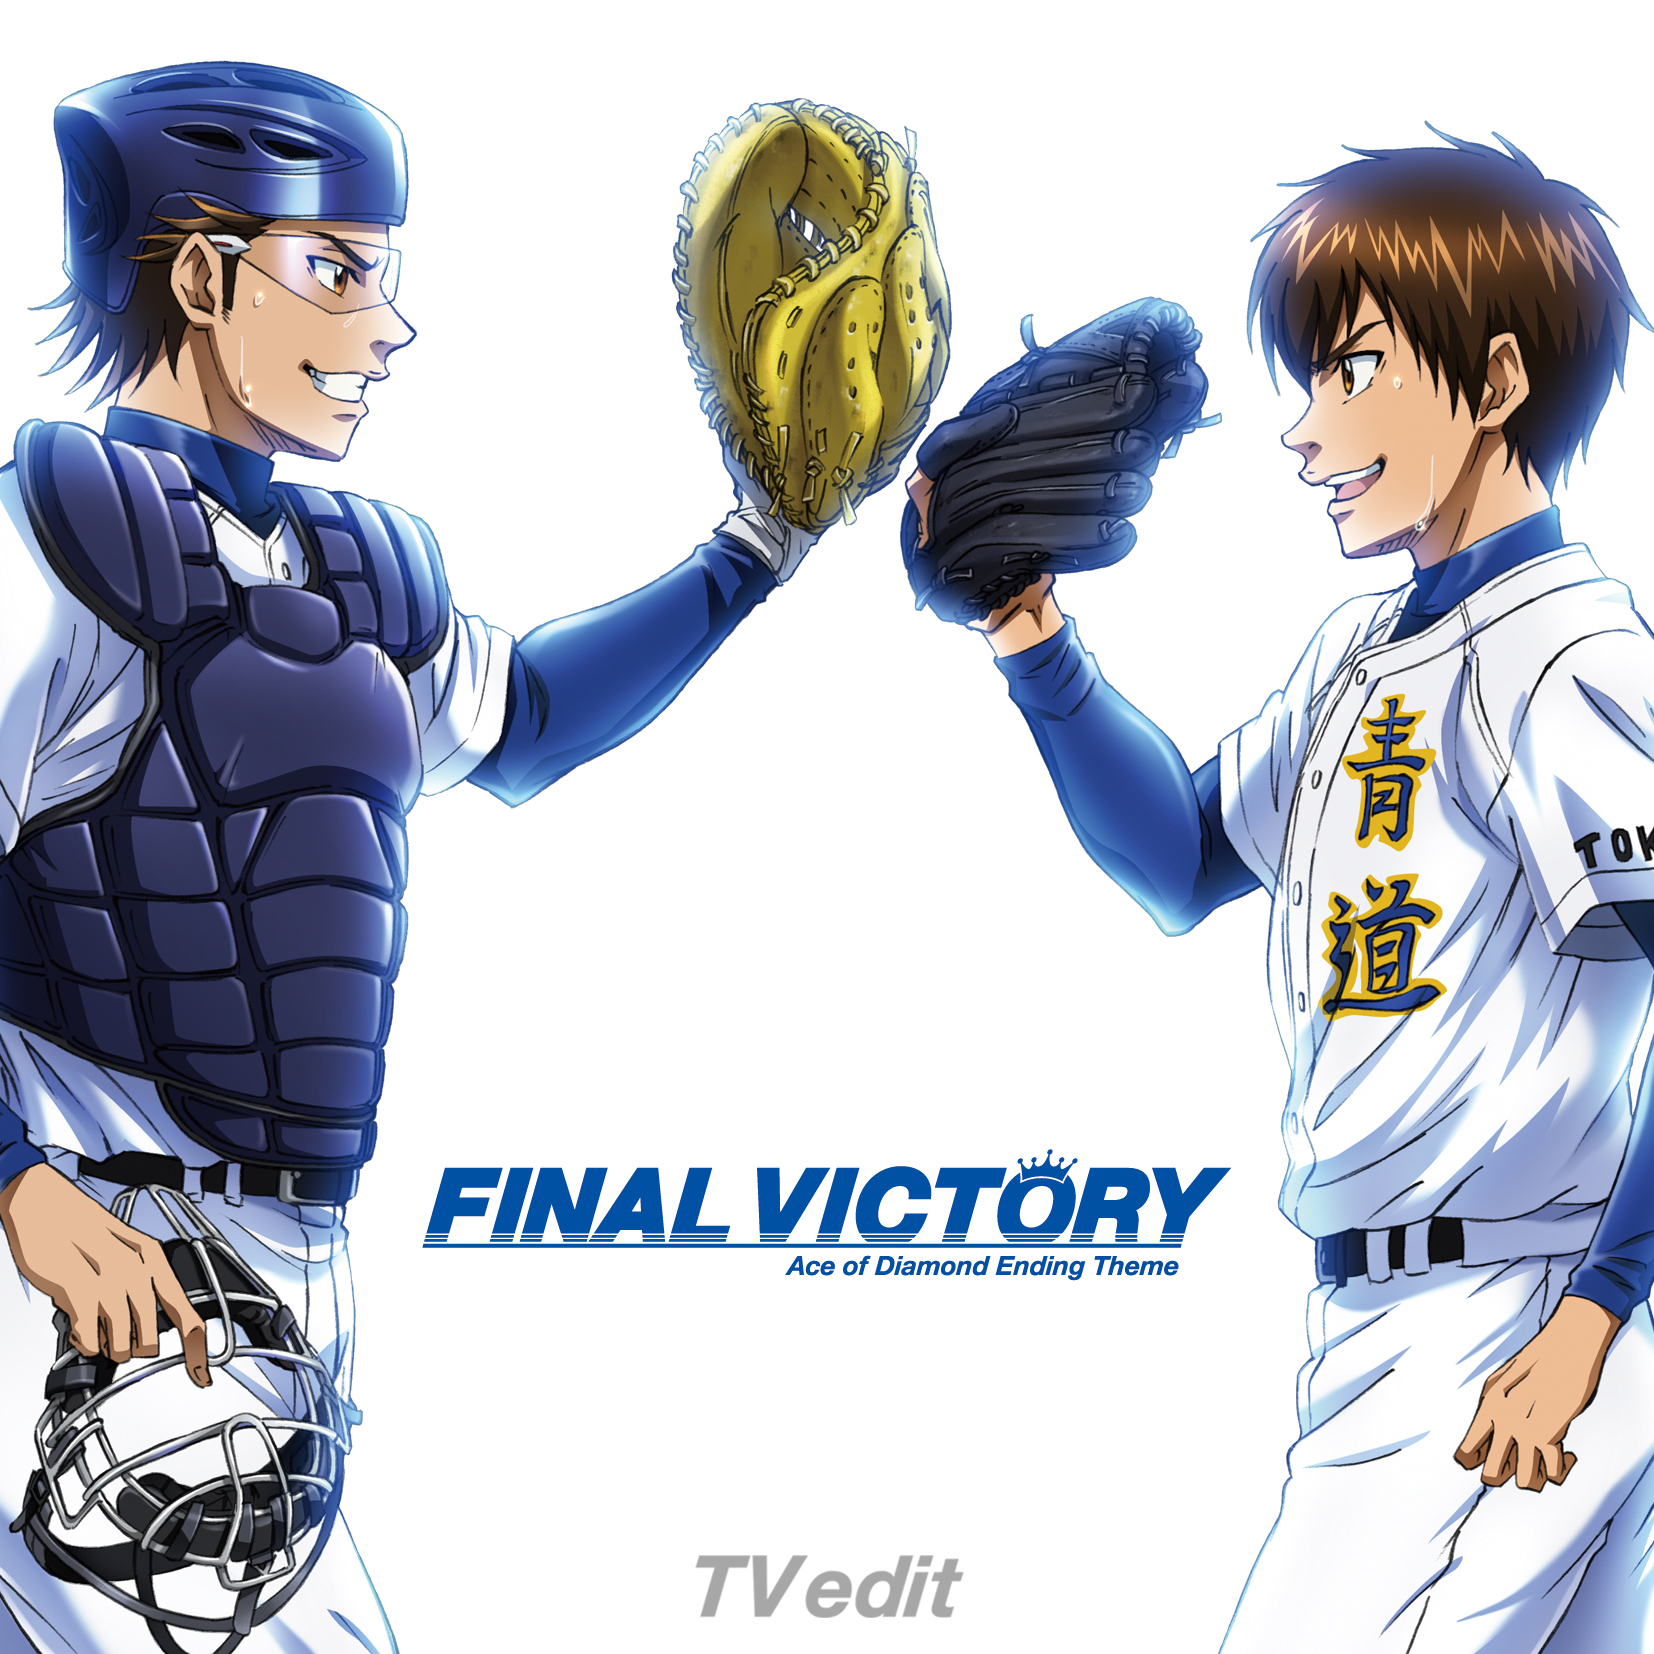 FINAL VICTORY (TV edit)